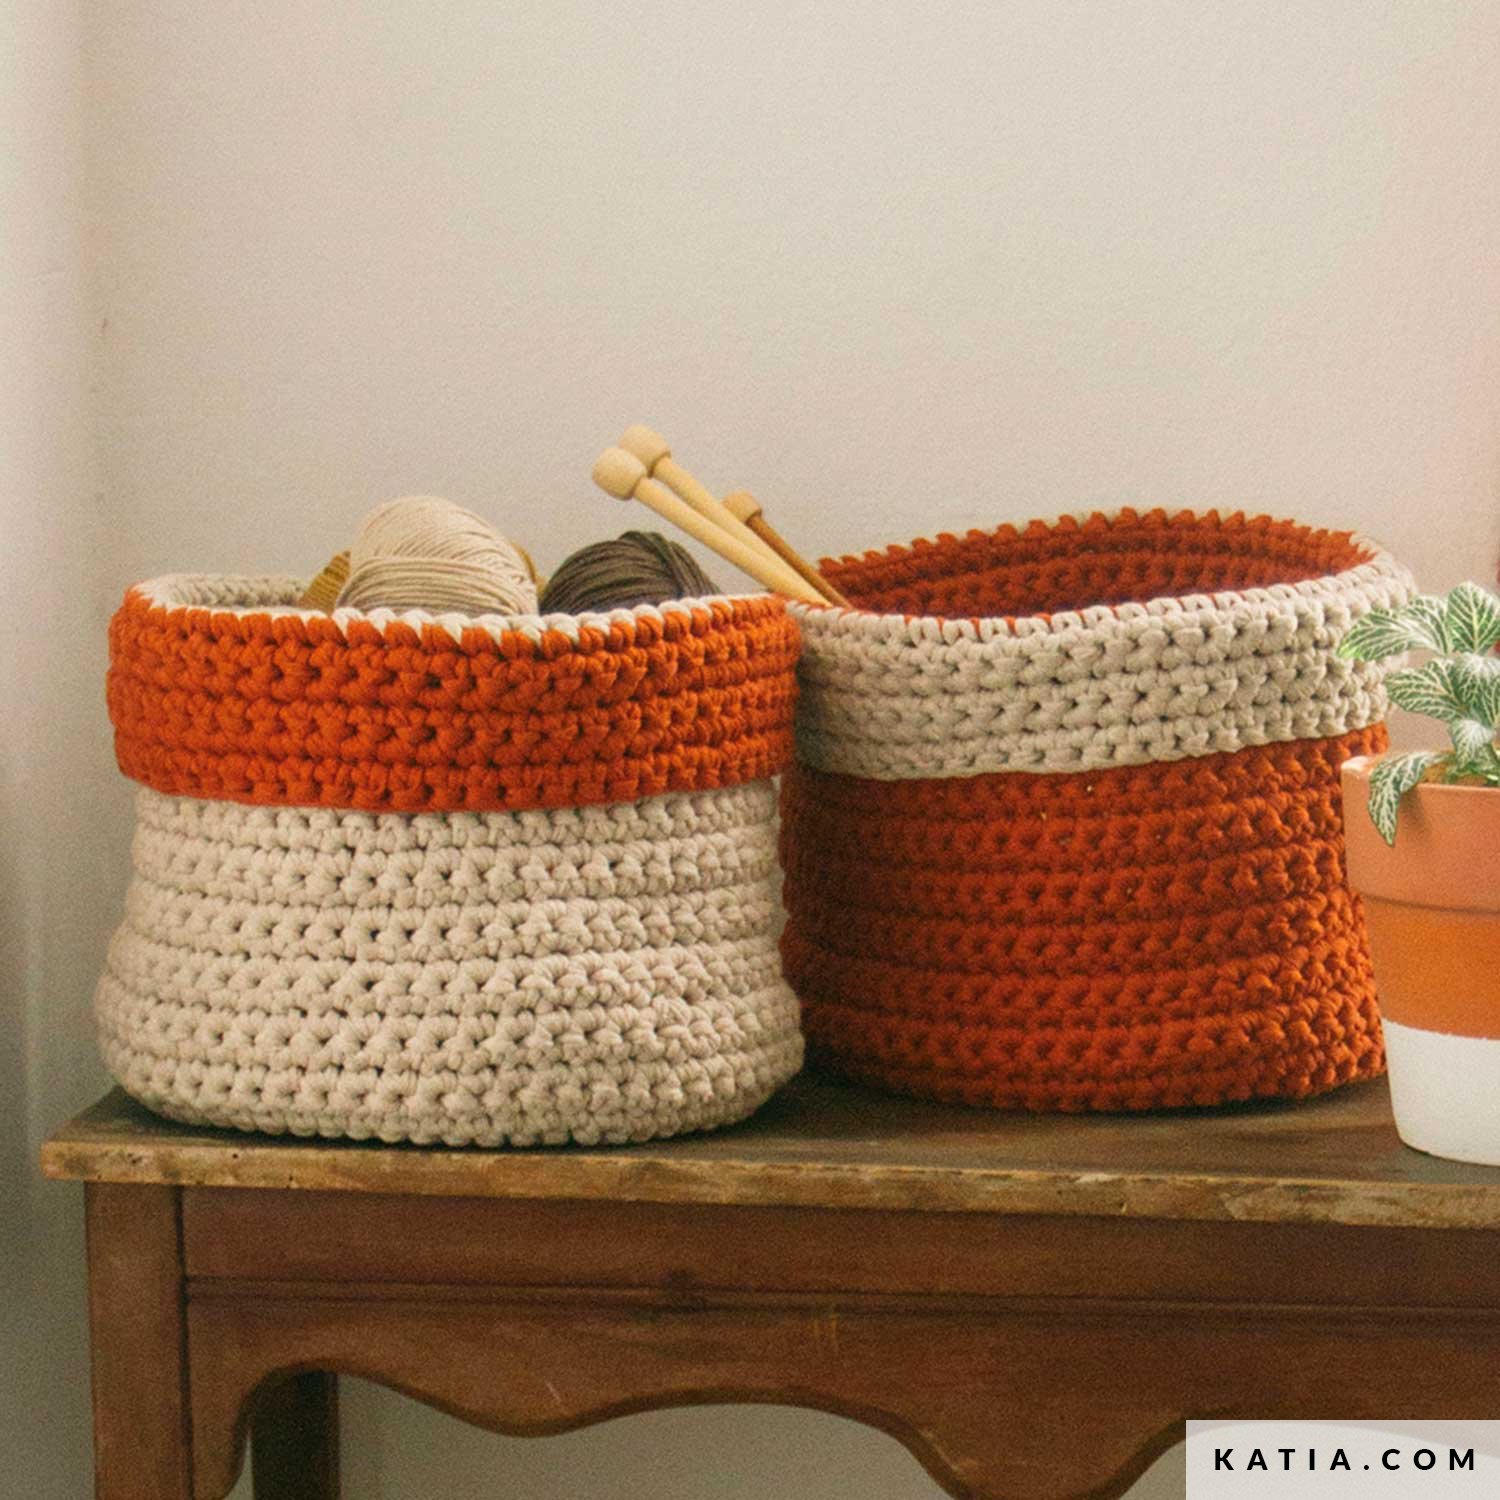 https://www.katia.com/files/mod/5019/pattern-knit-crochet-home-basket-autumn-winter-katia-5019-3-g.jpg